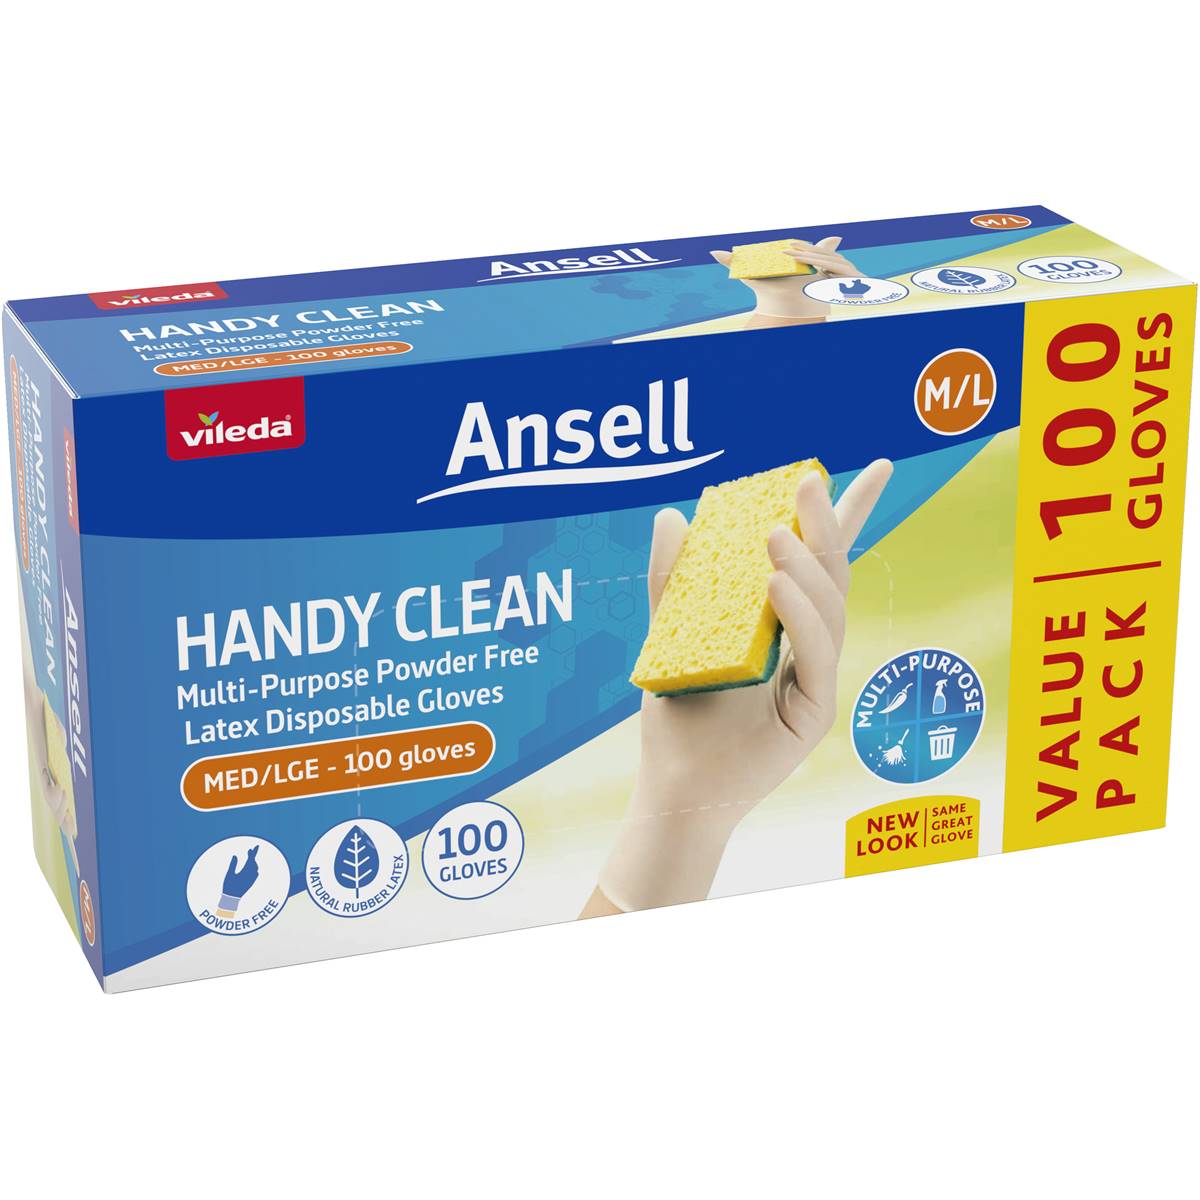 Vileda Ansell Handy Clean Latex Multi-purpose Gloves M/l 100 Pack